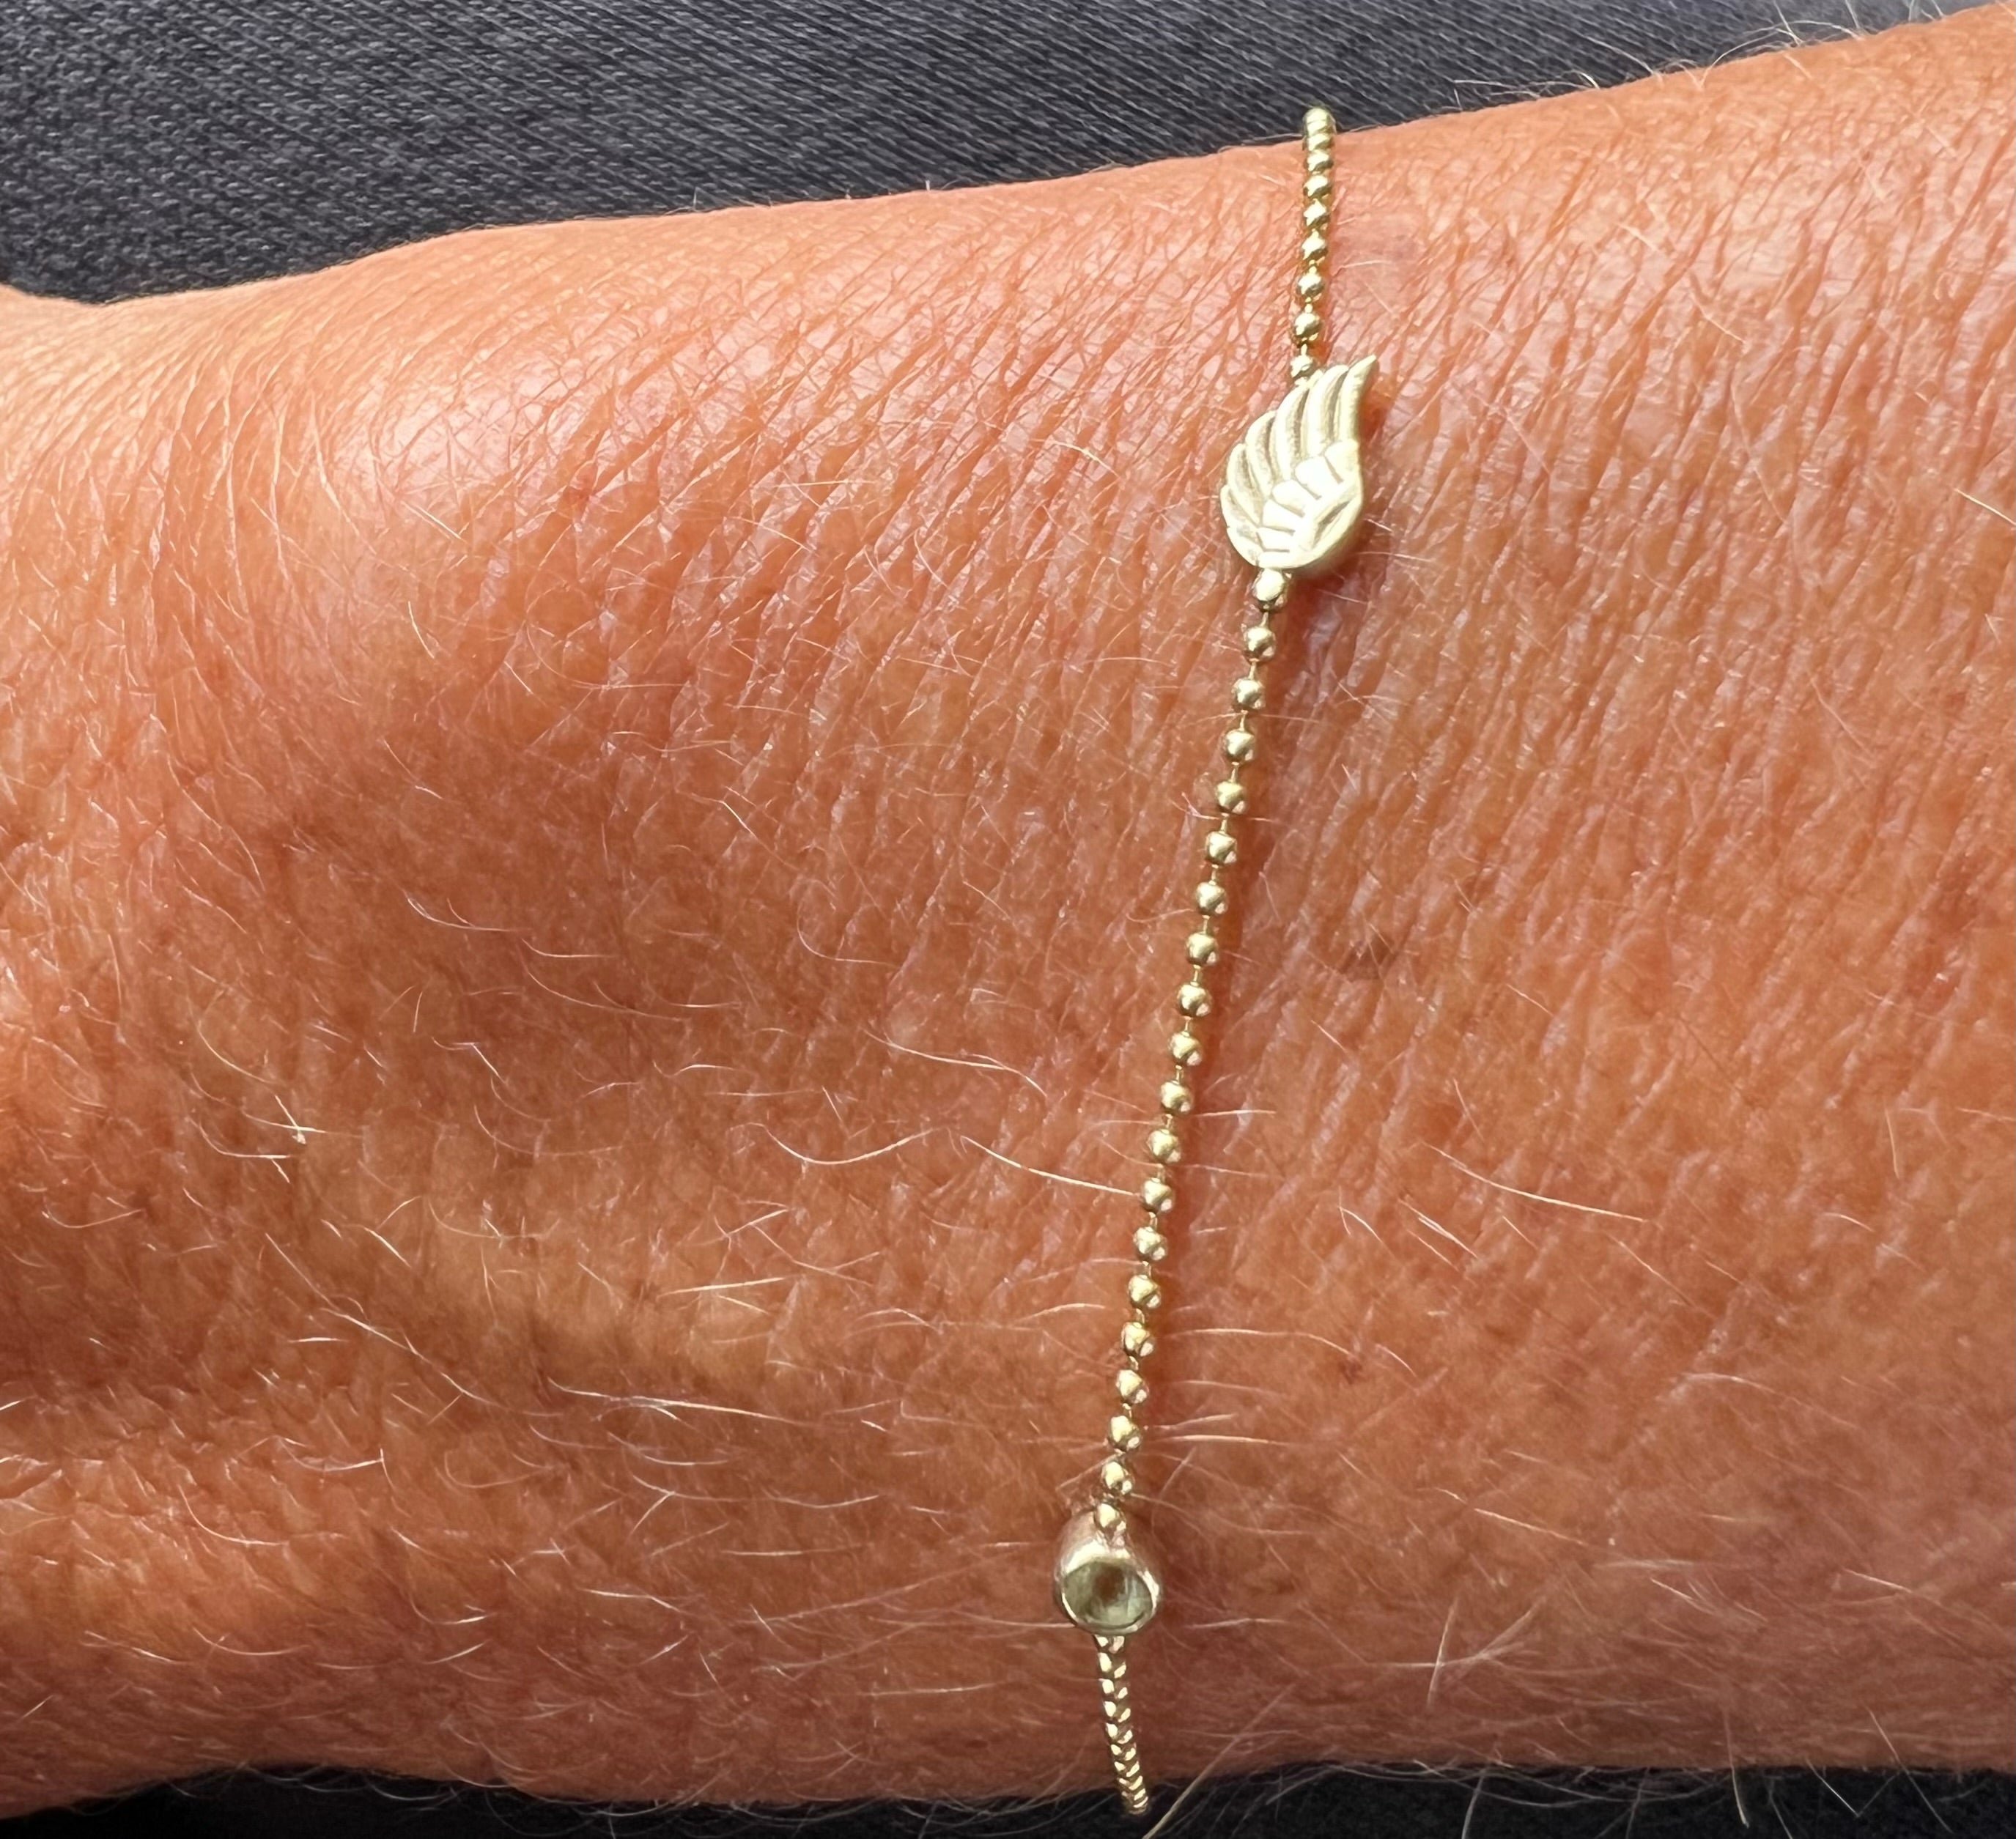 Carrying Love Beyond Loss: Sheri's Personalized Bracelet